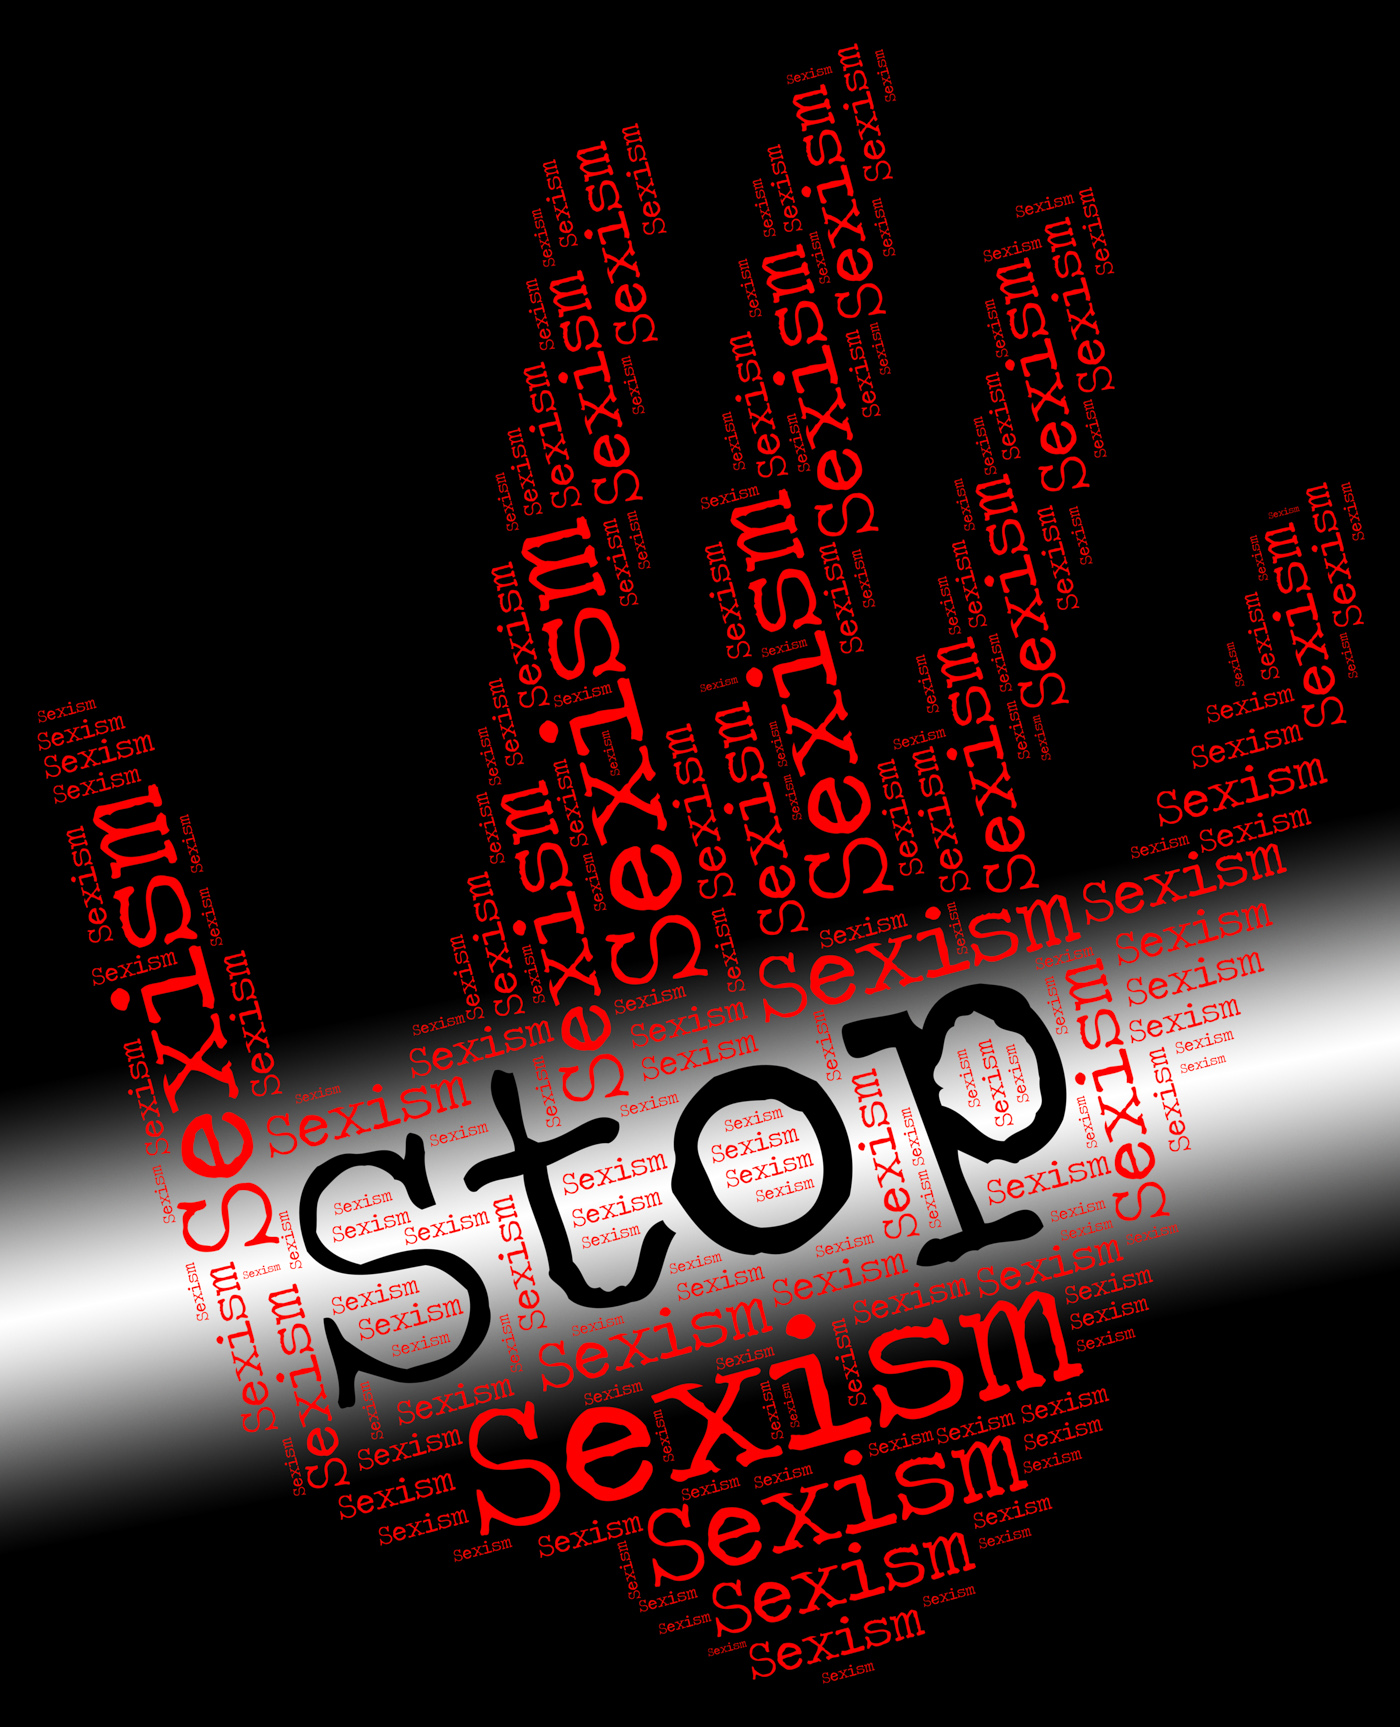 Stop sexism represents gender prejudice and control photo